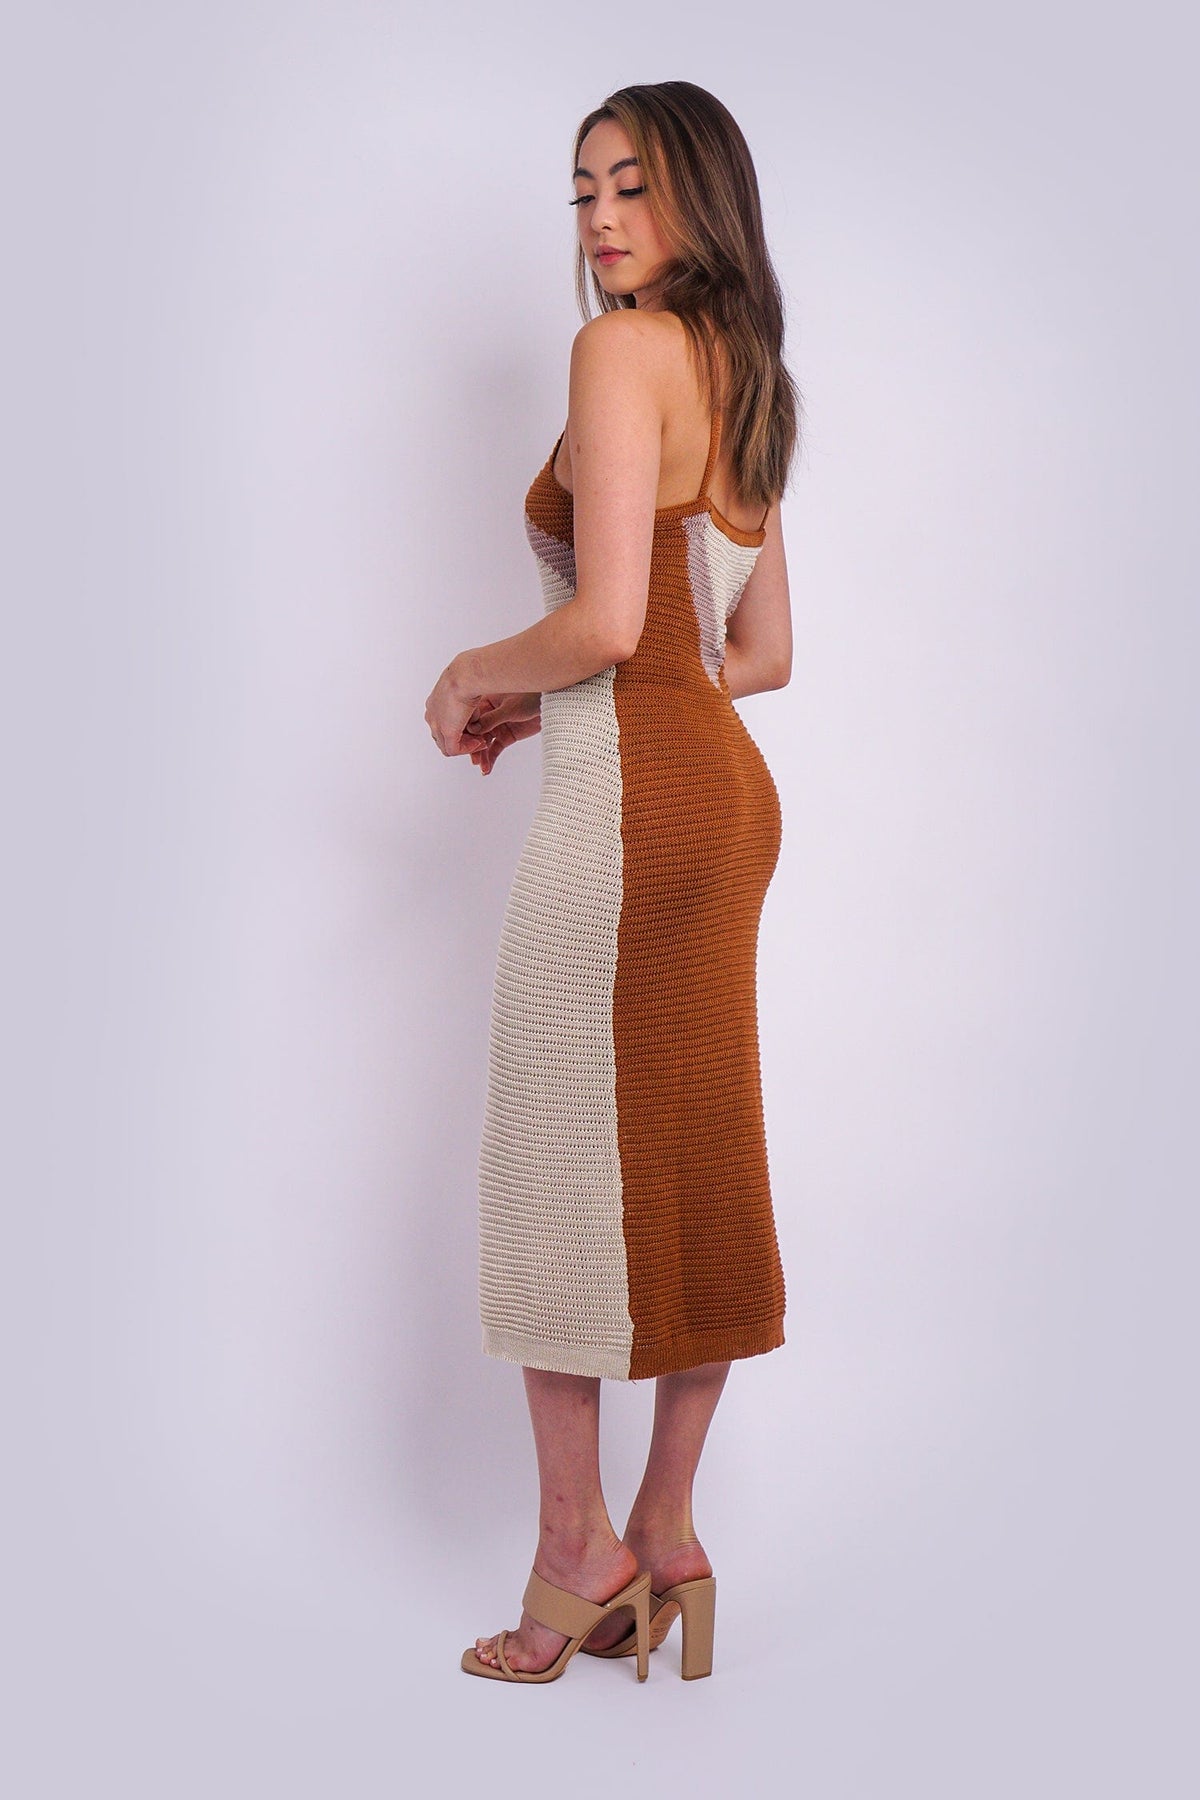 DCD Dresses Tan Ivory Knit  Slip Dress